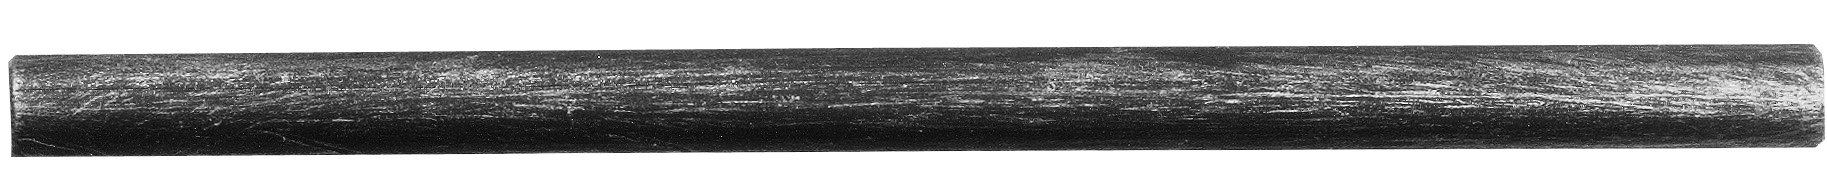 Bundmaterial | Material: 16x5 mm | Länge: 2000 mm | Stahl S235JR, roh